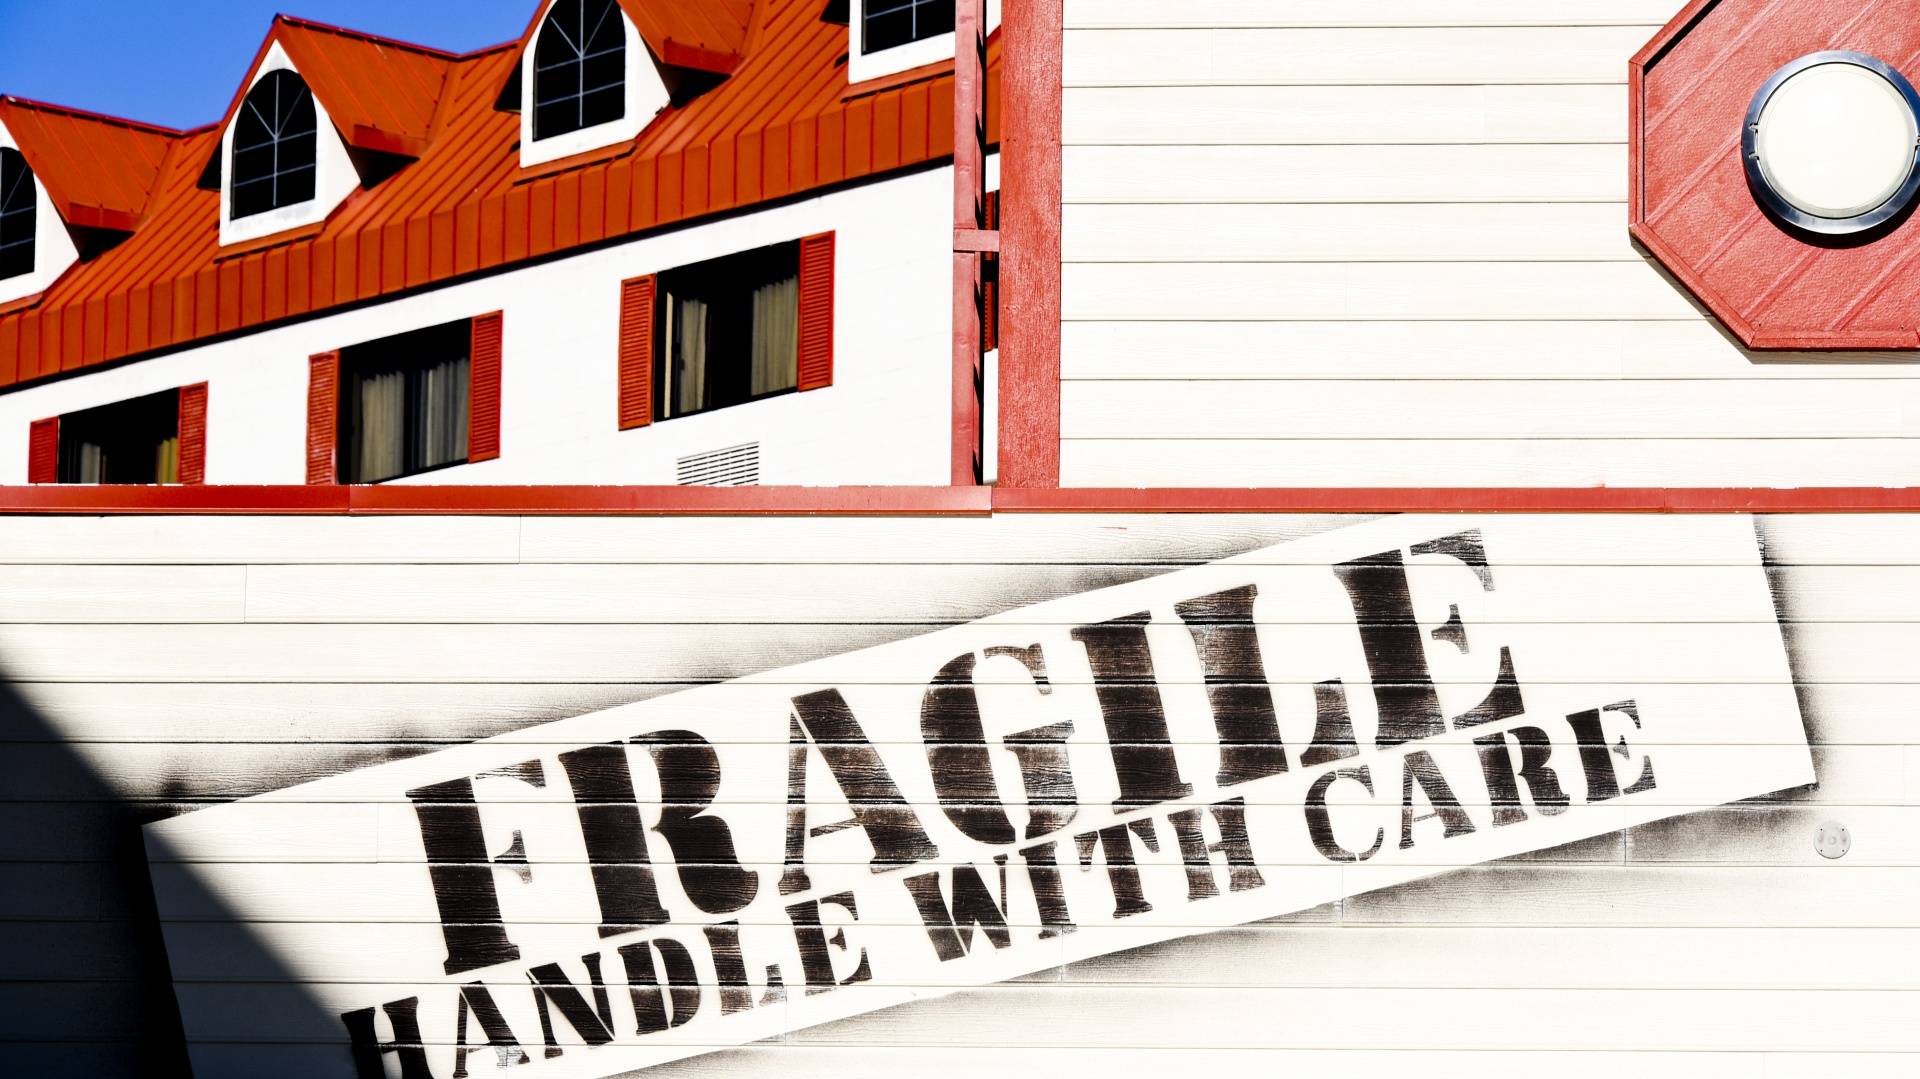 fragile handle care free photo